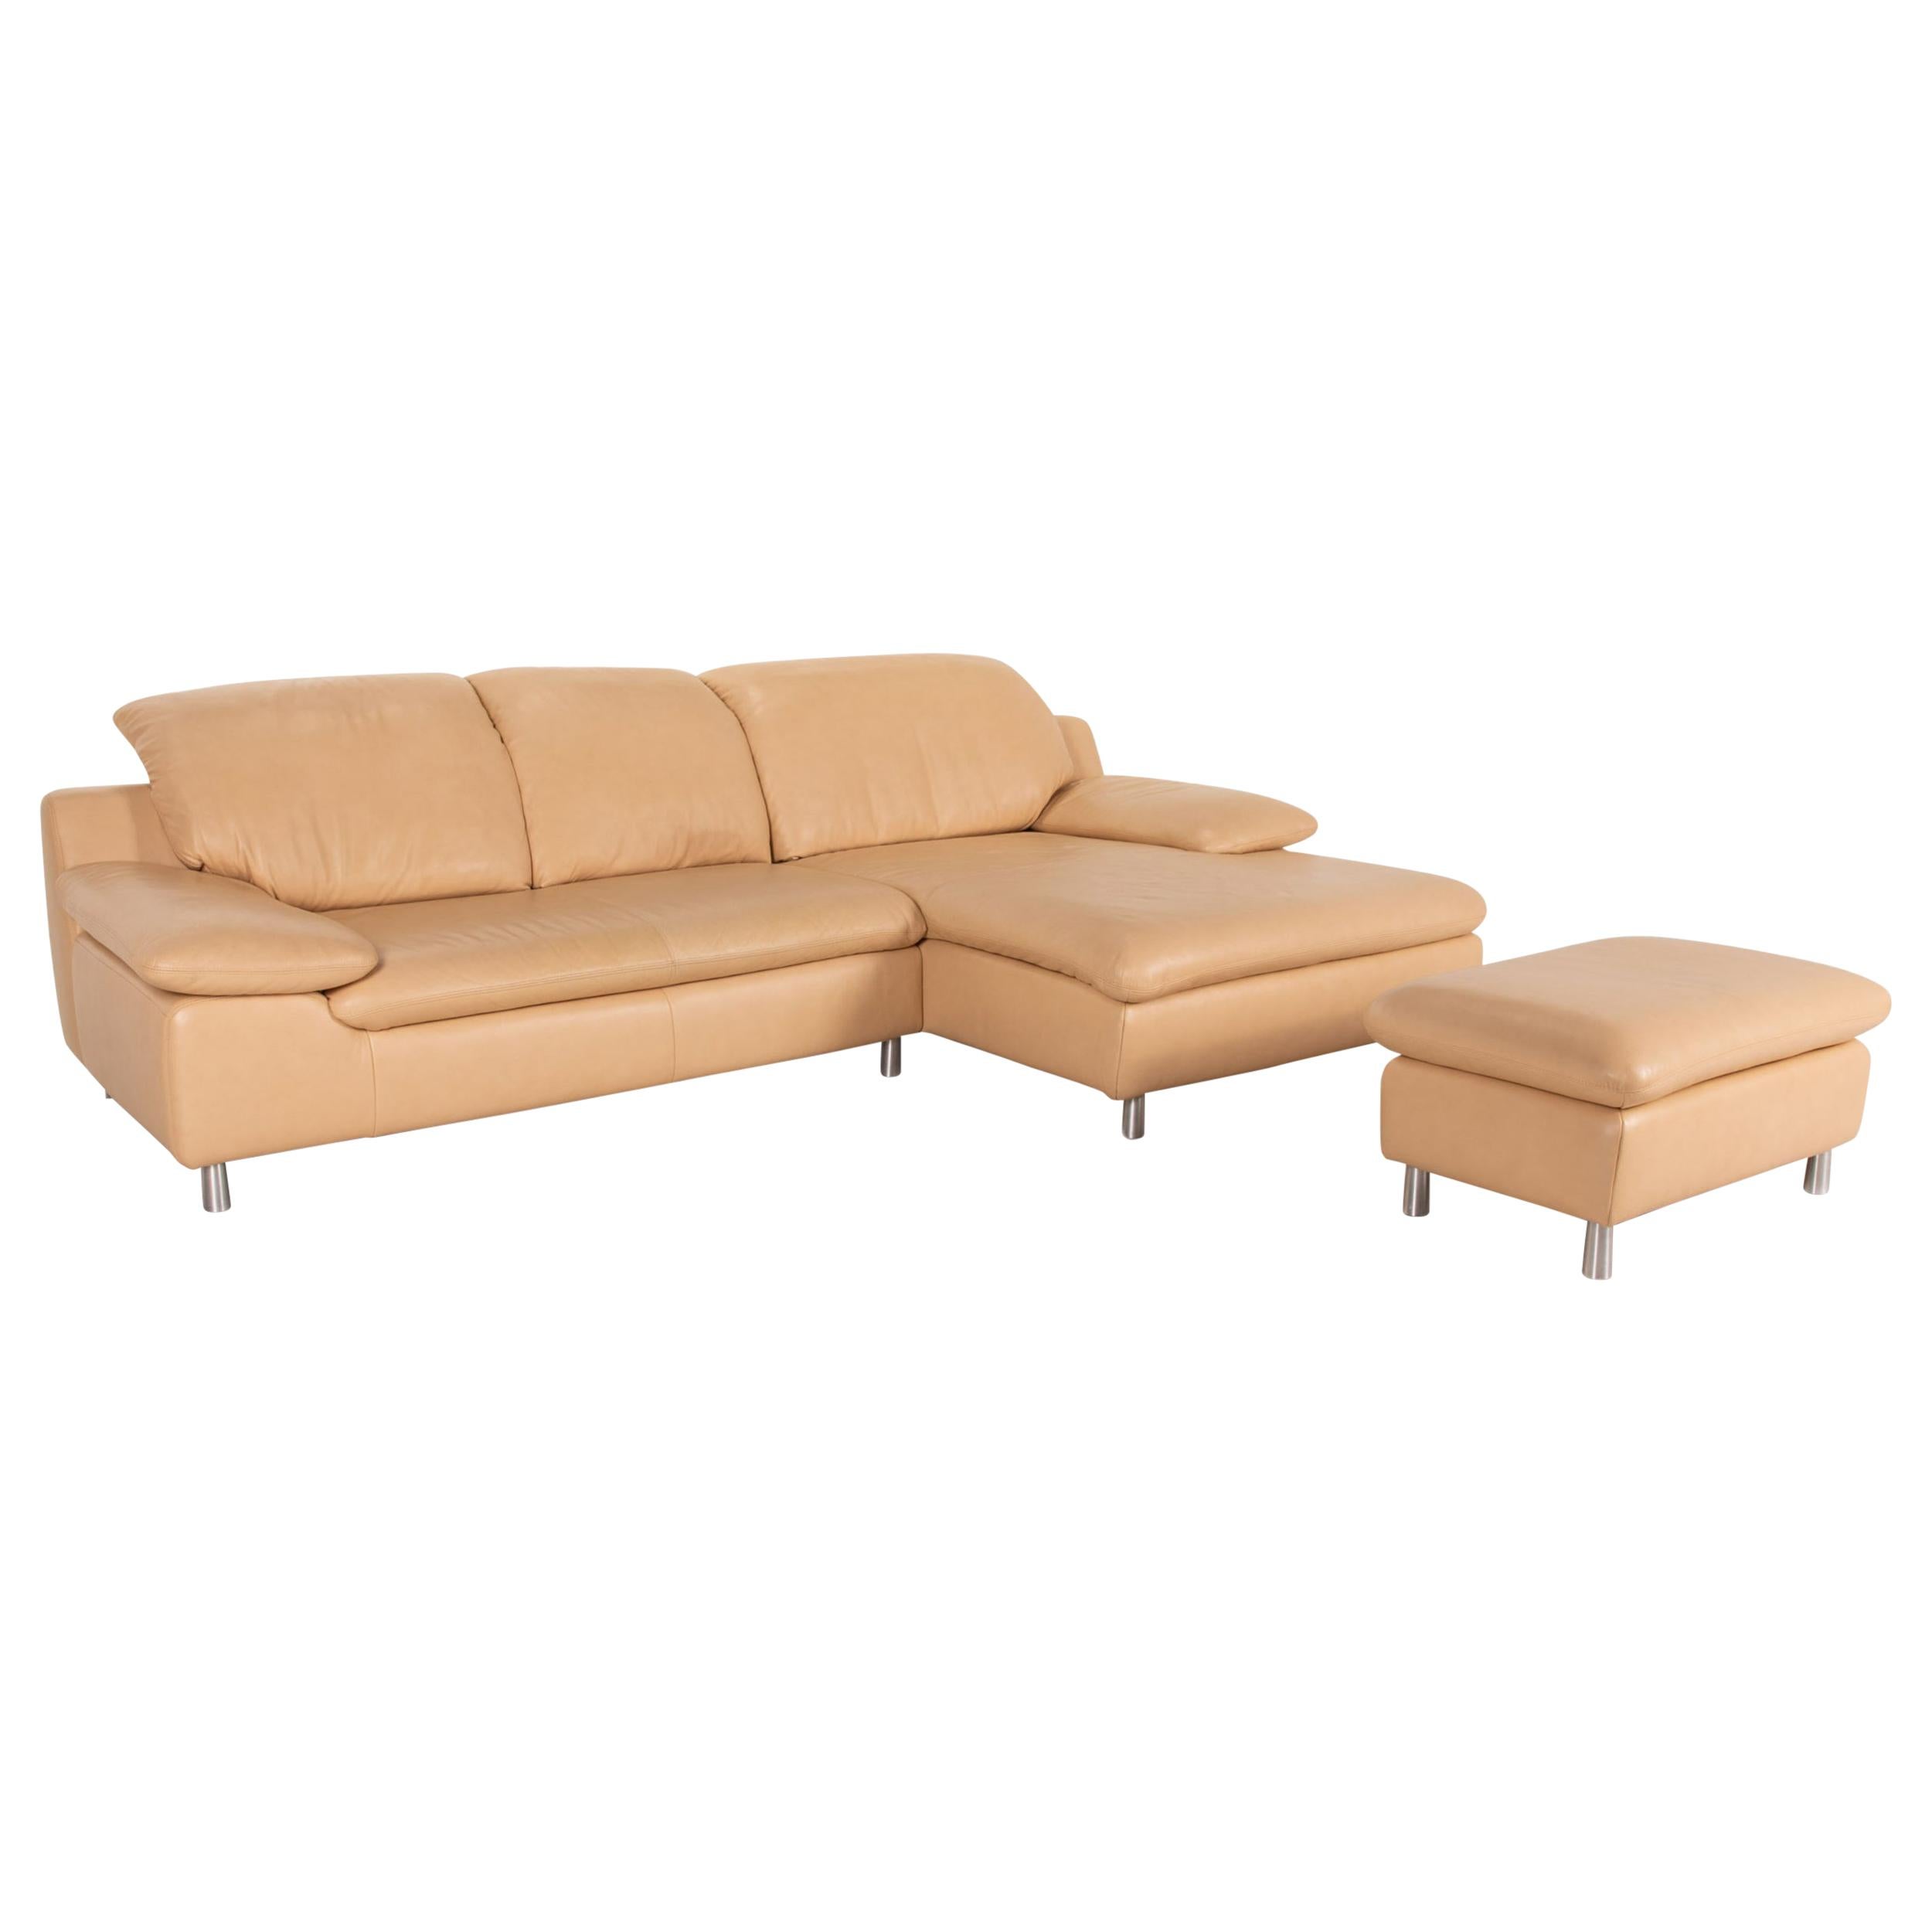 Ewald Schillig Leather Corner Sofa Beige Sofa Couch Incl, Stool